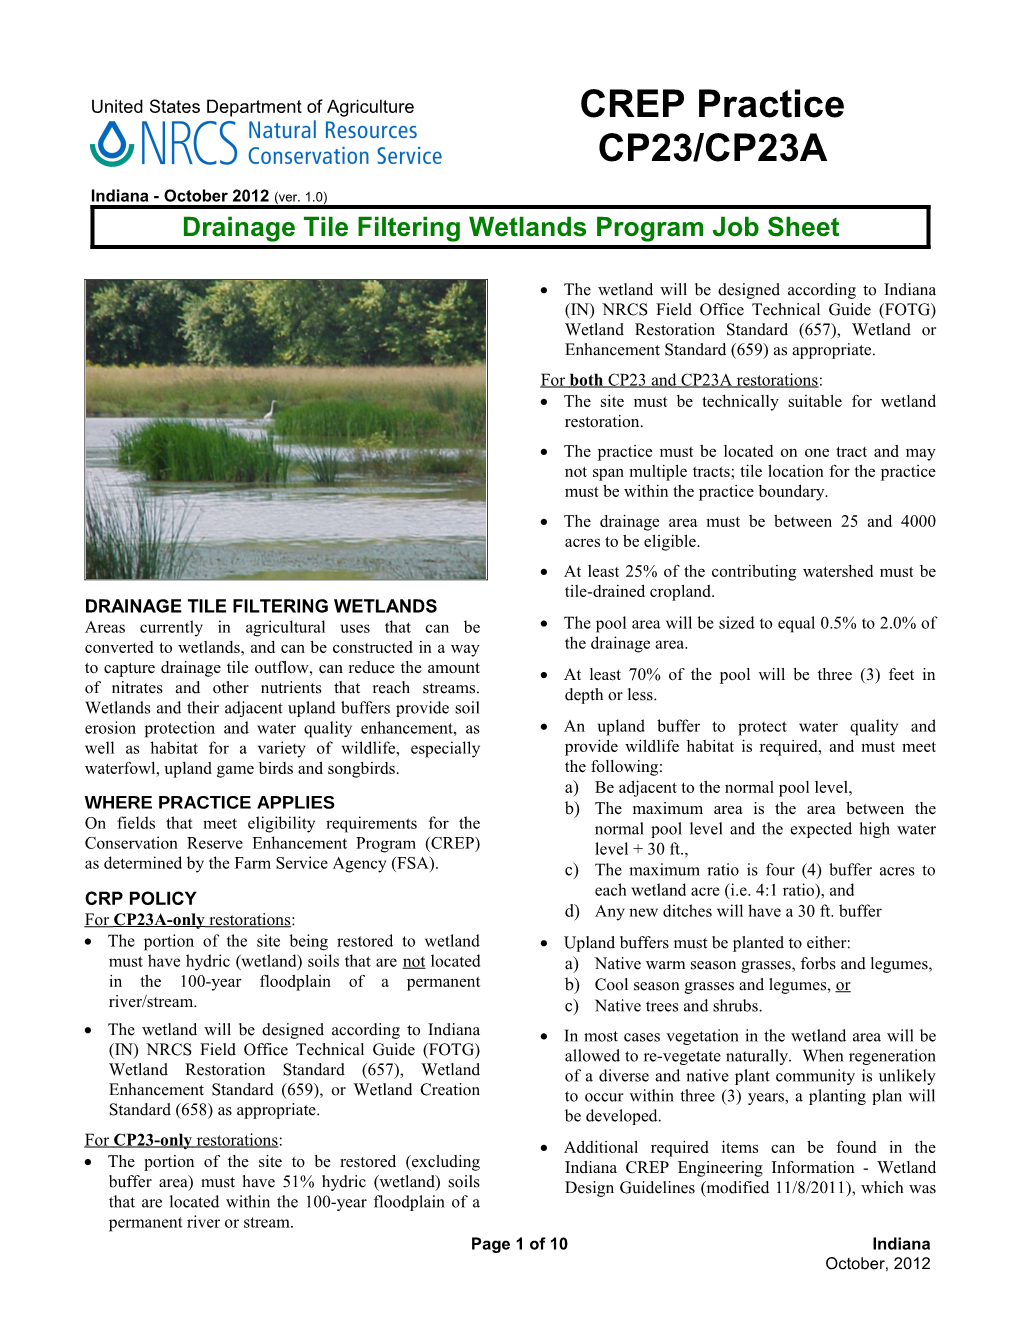 Drainage Tile Filtering Wetlandsprogram Job Sheet